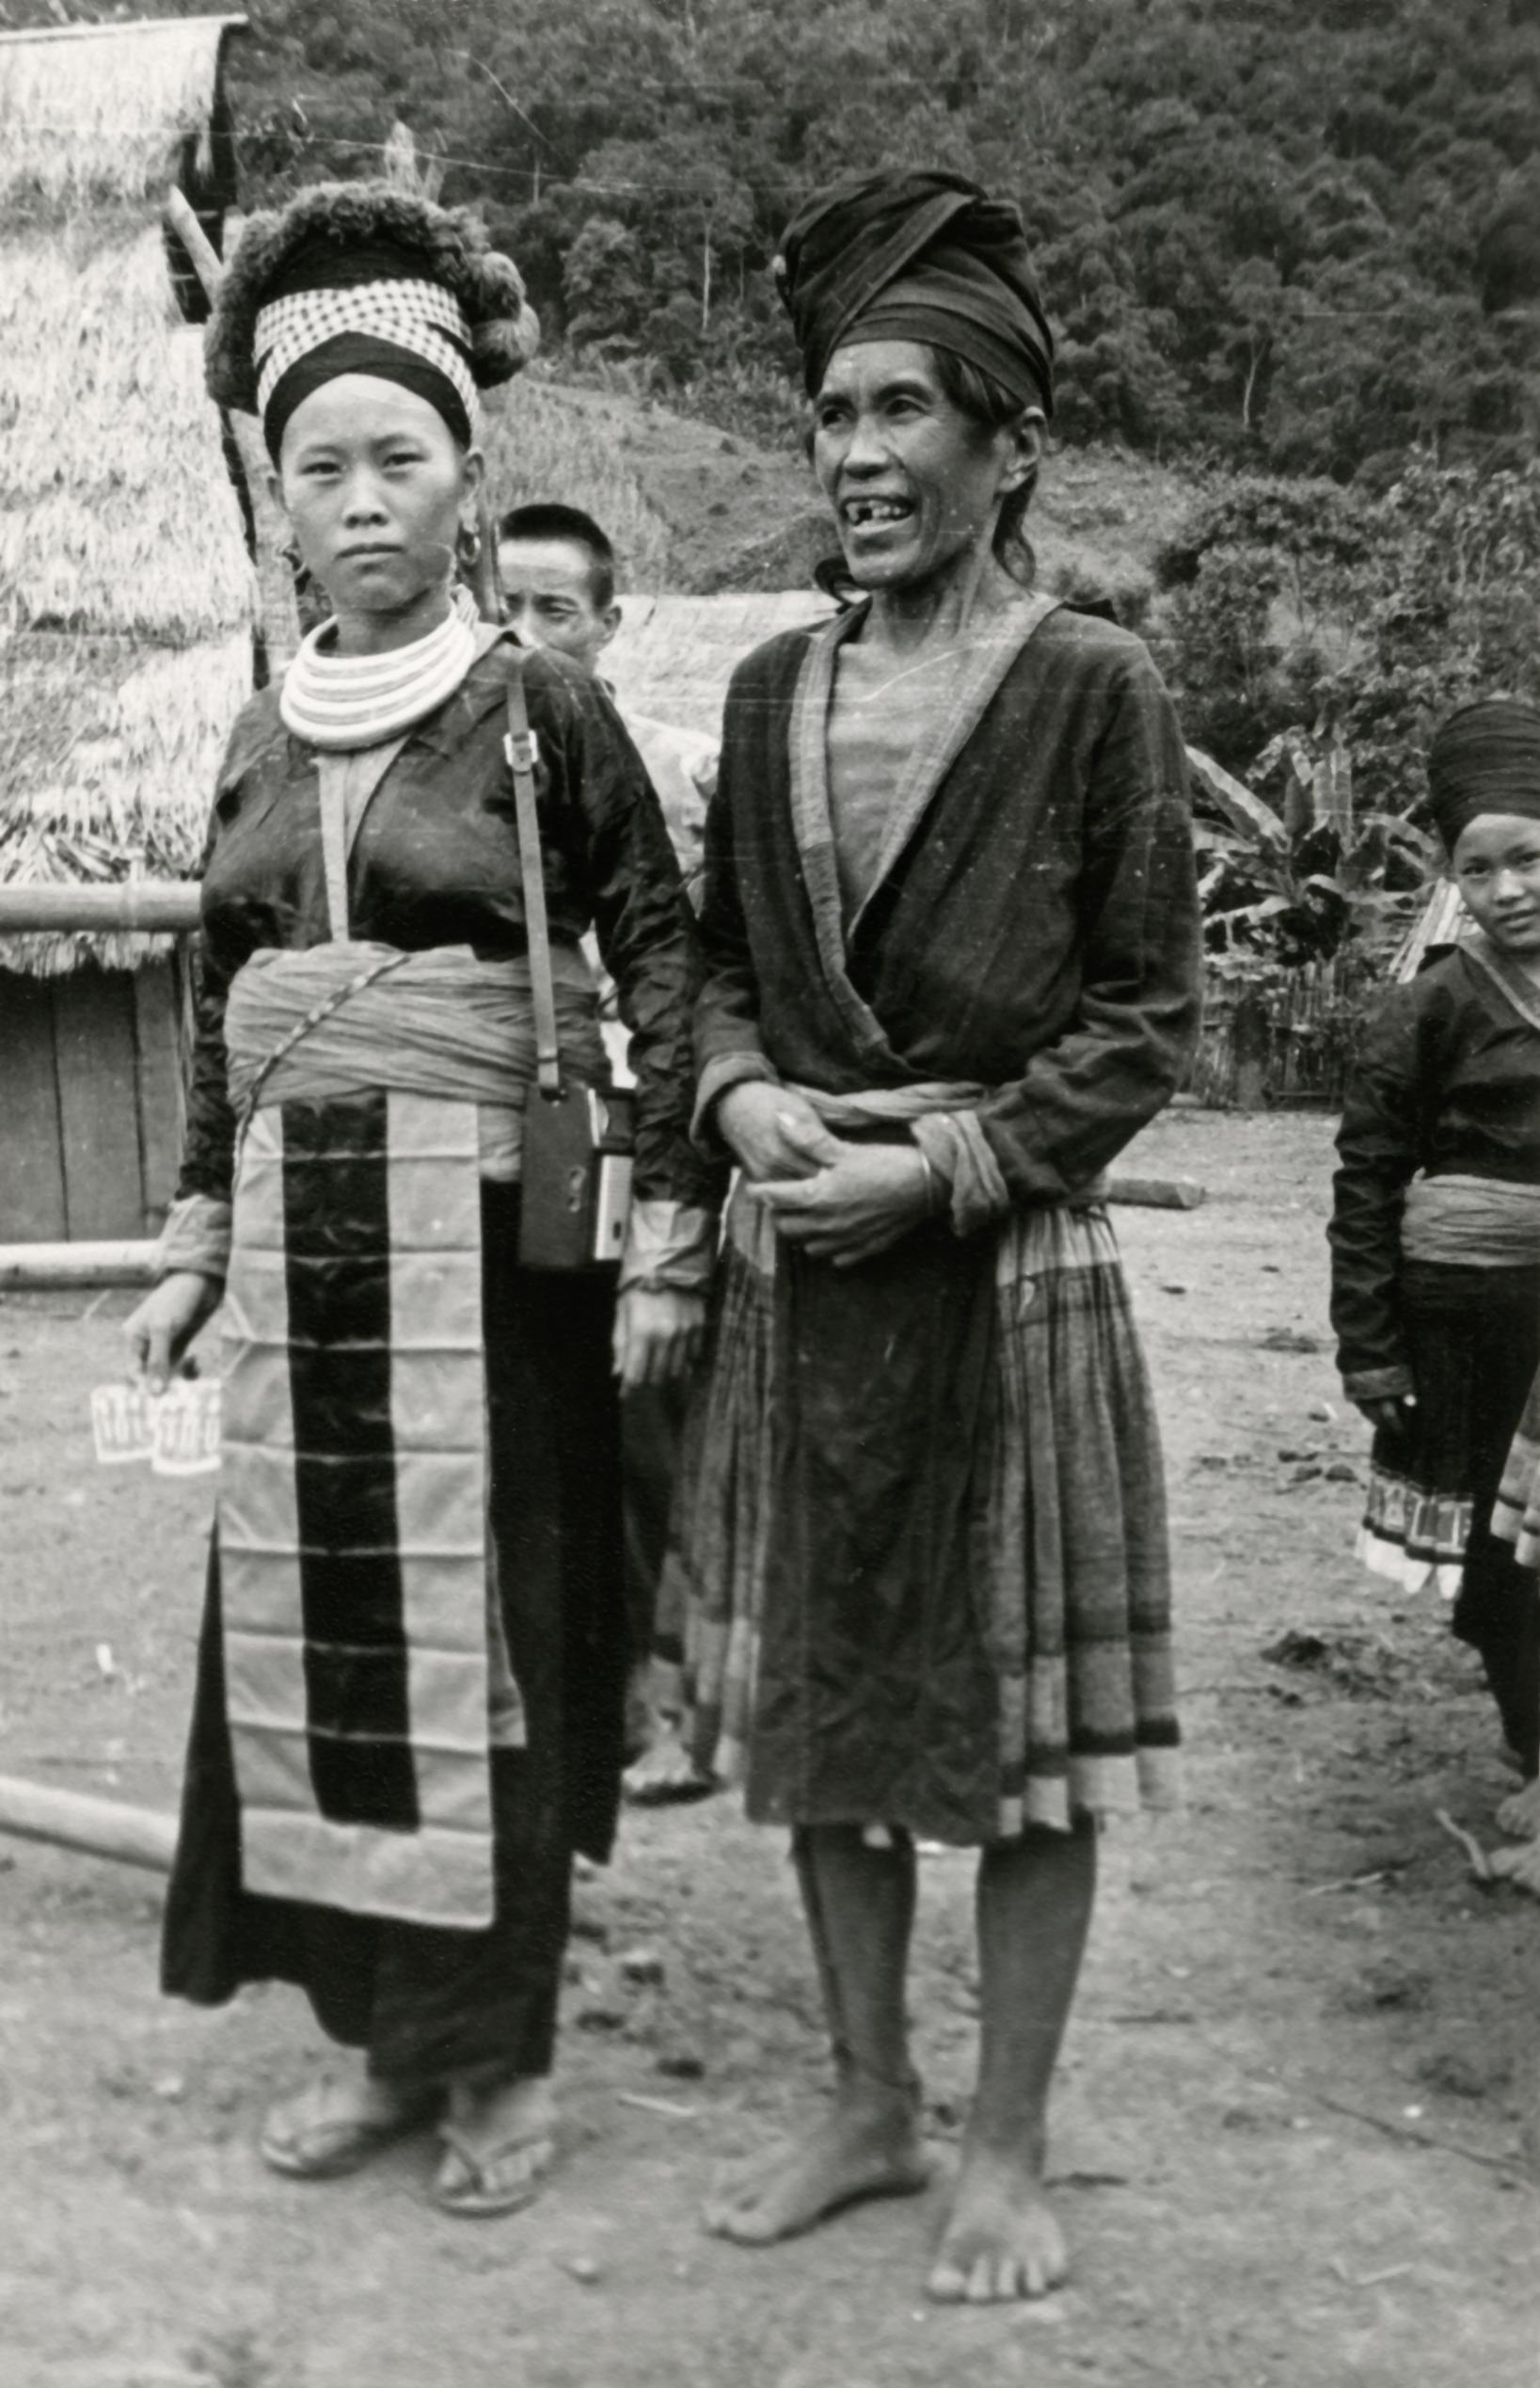 hmong people history